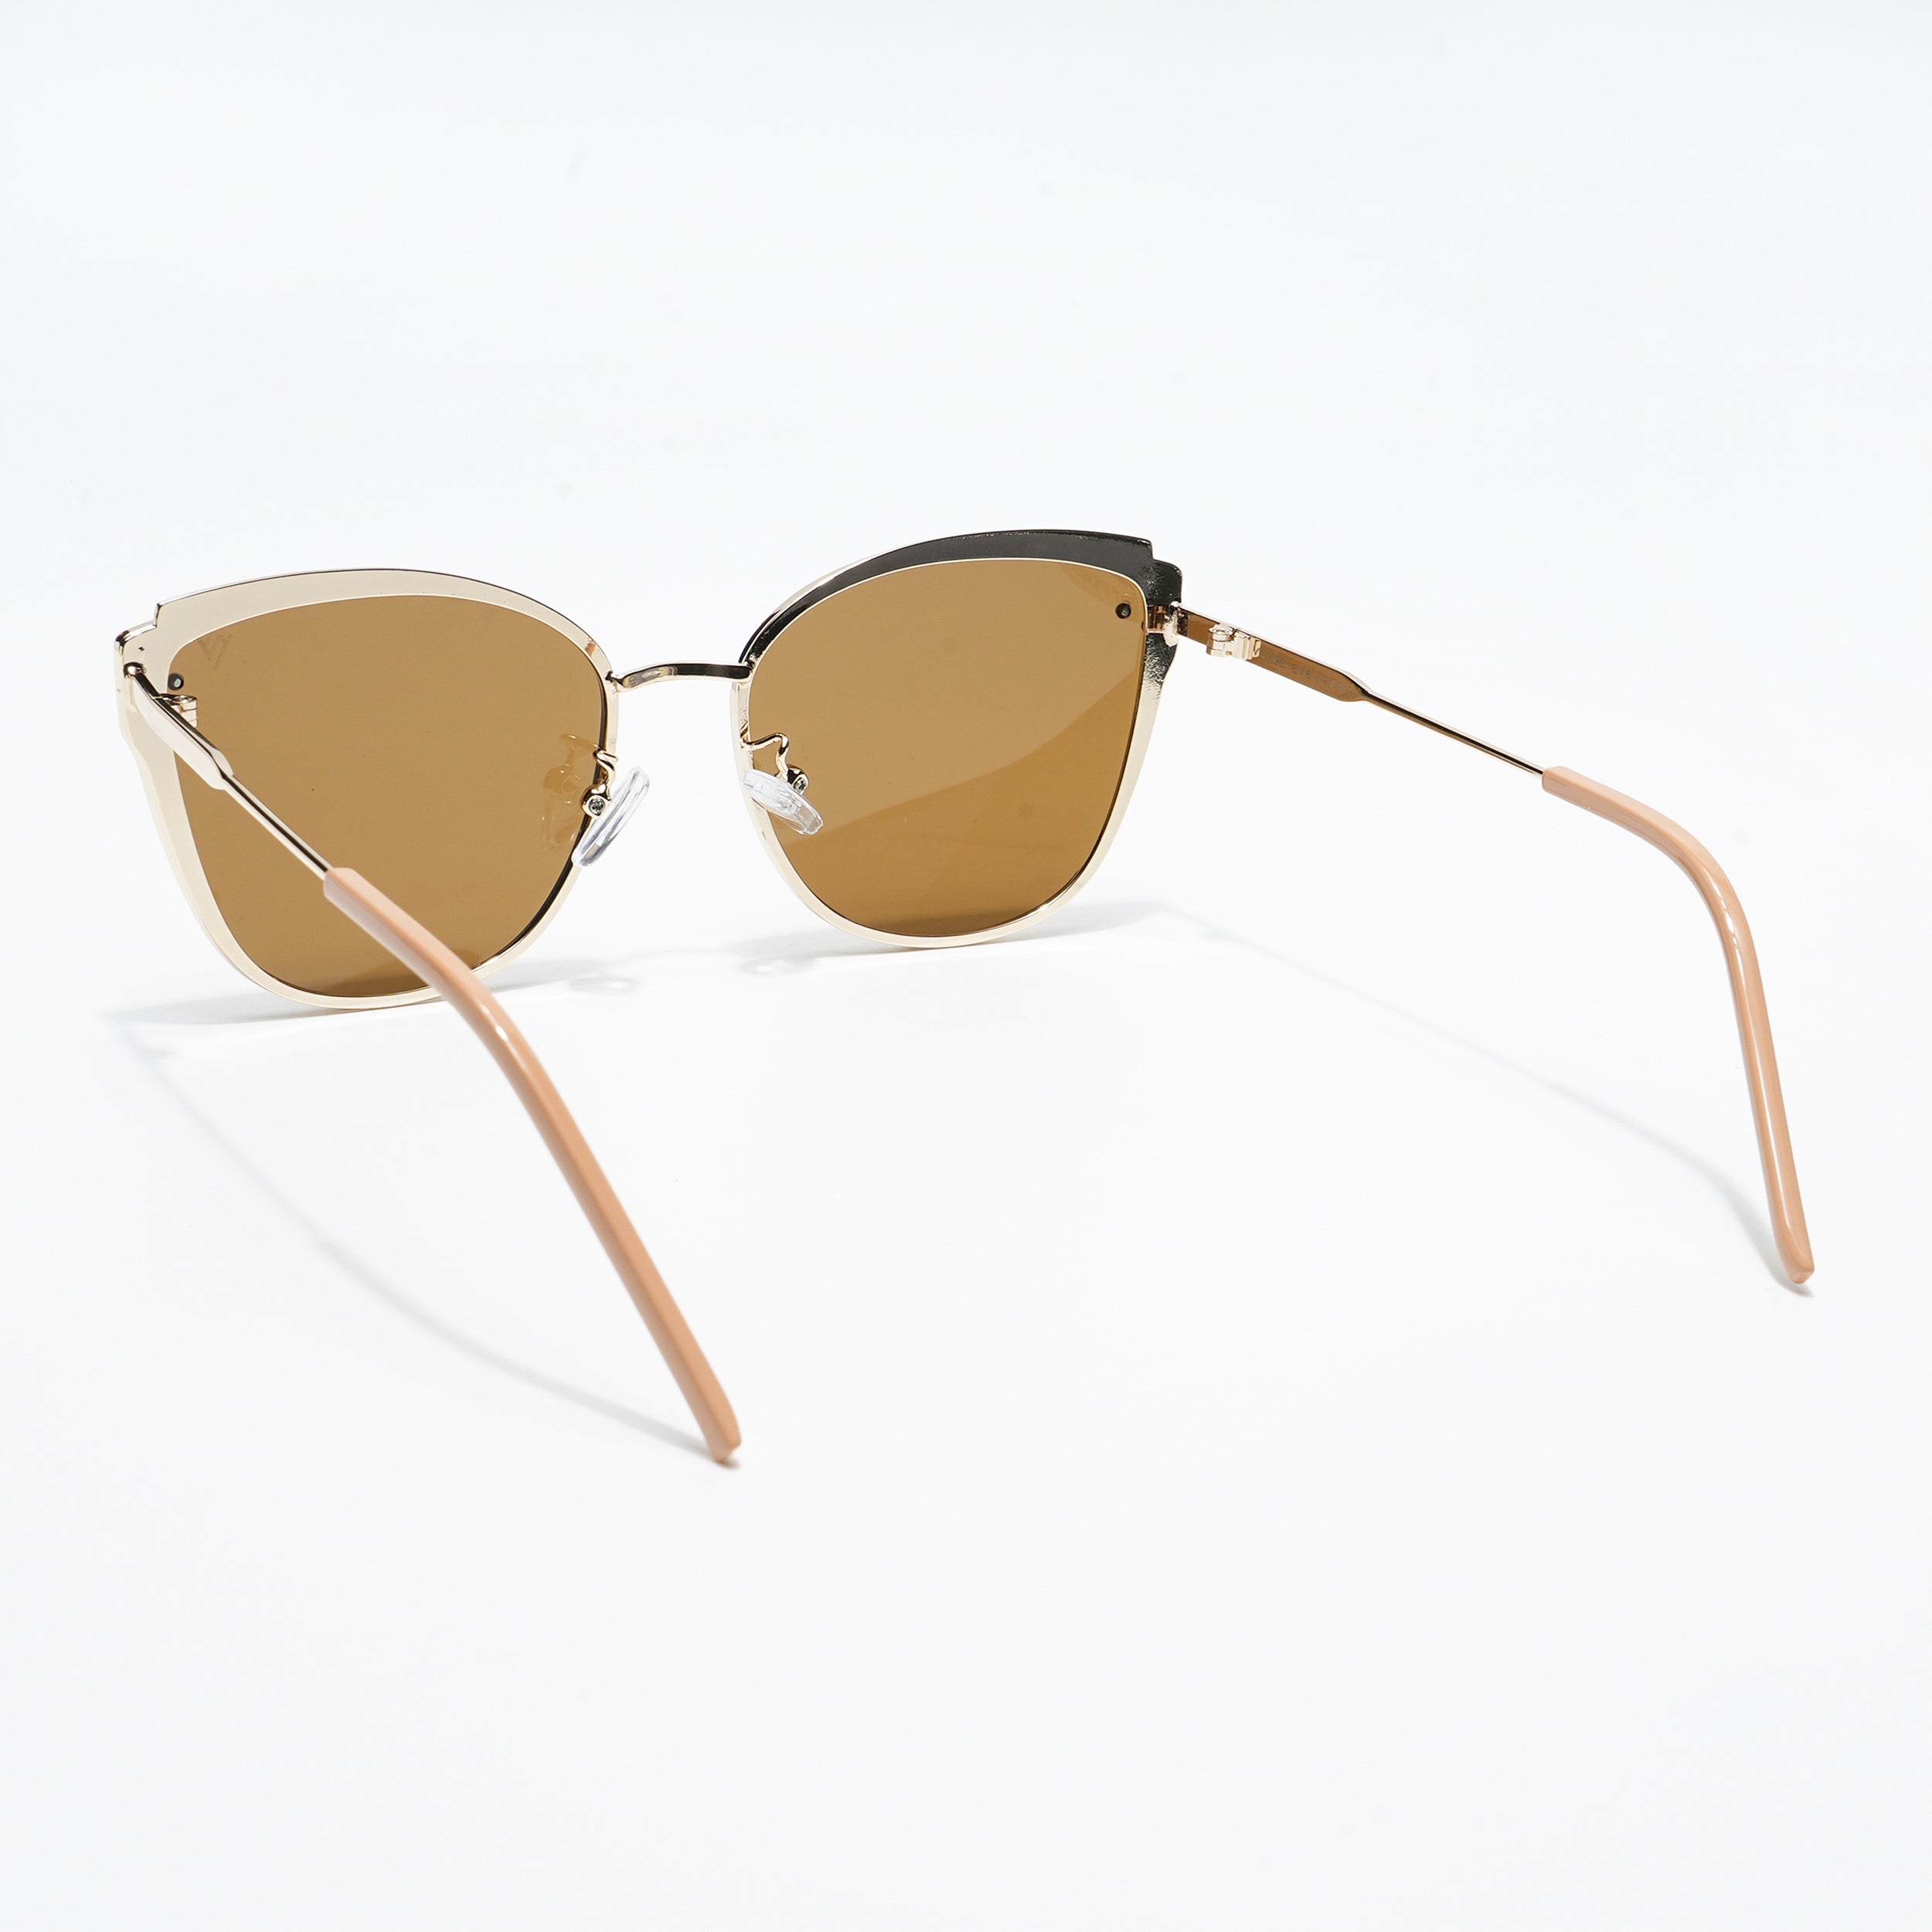 Voyage Cateye Brown Sunglasses MG2858